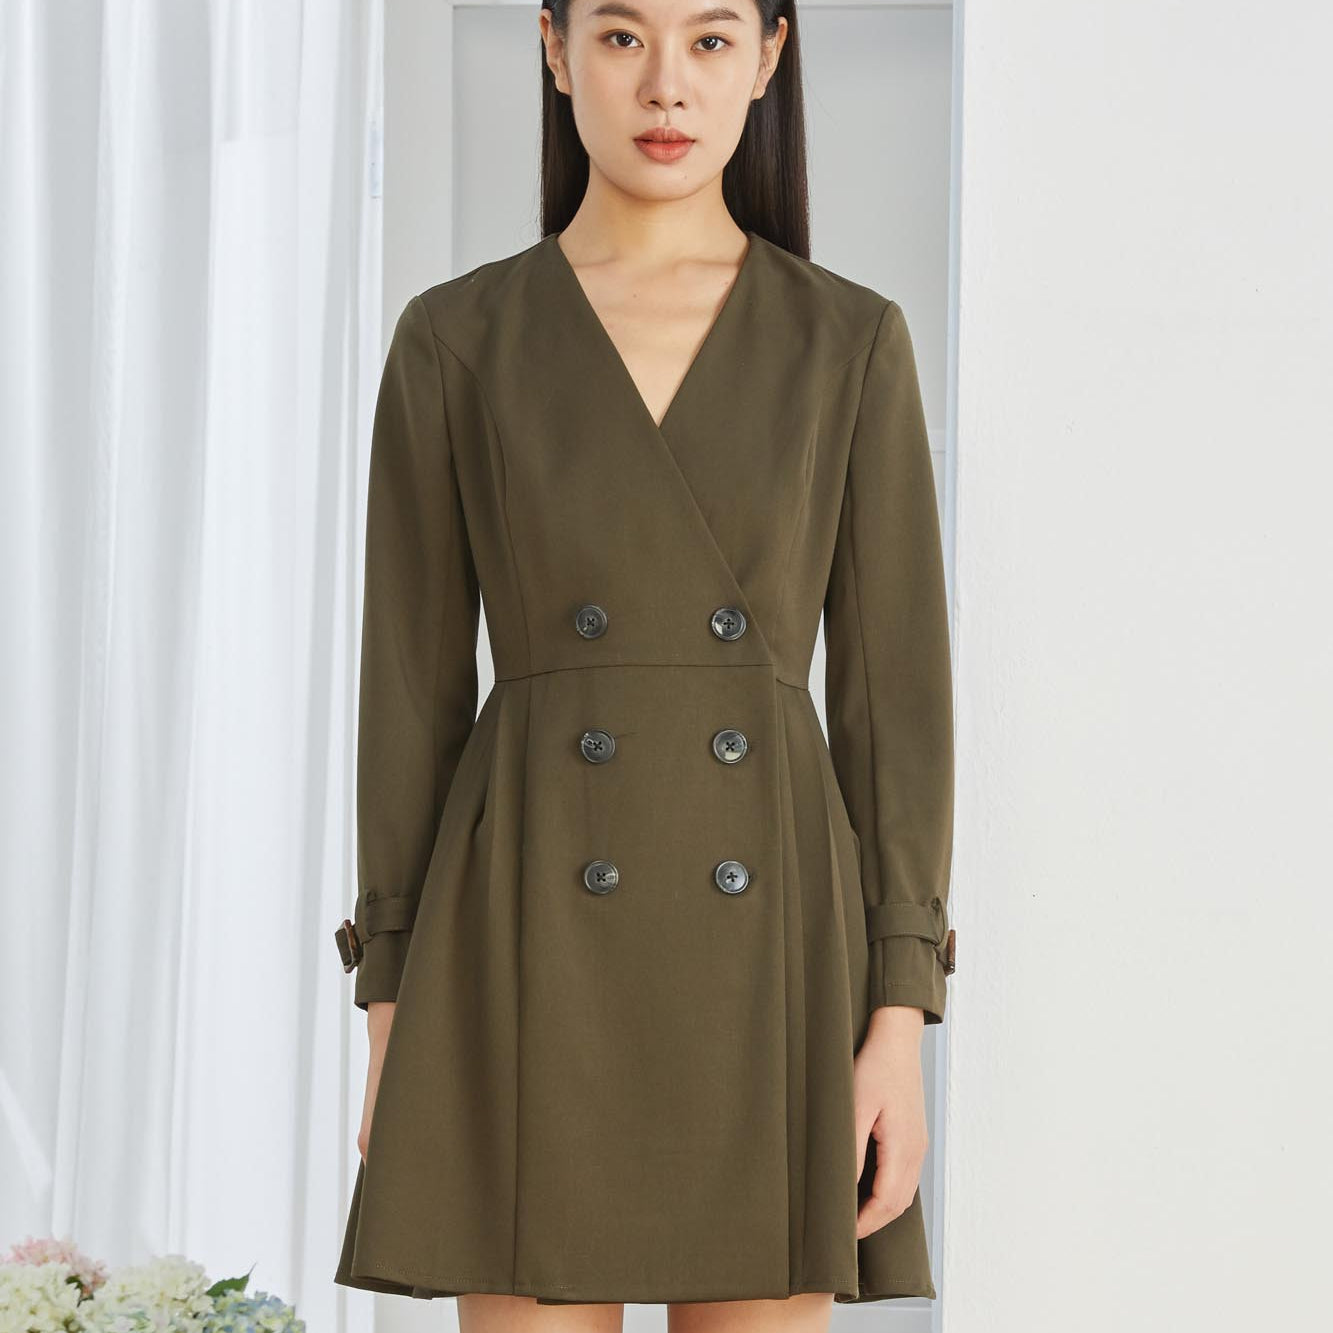 Jade double breasted coat dress